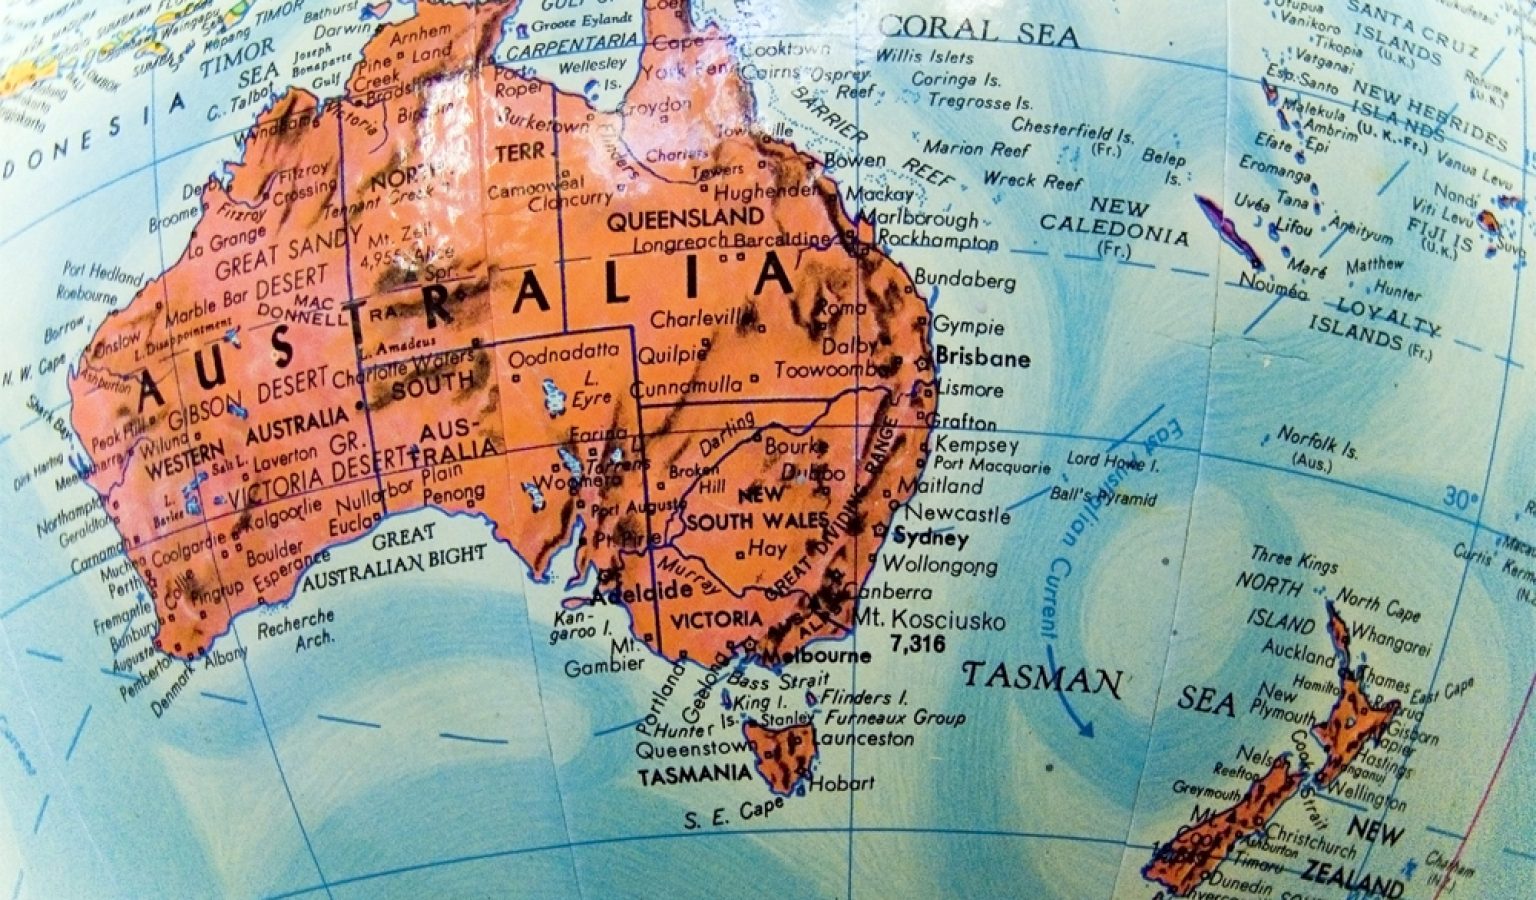 A Guide to Australia for Kiwis by a Kiwi